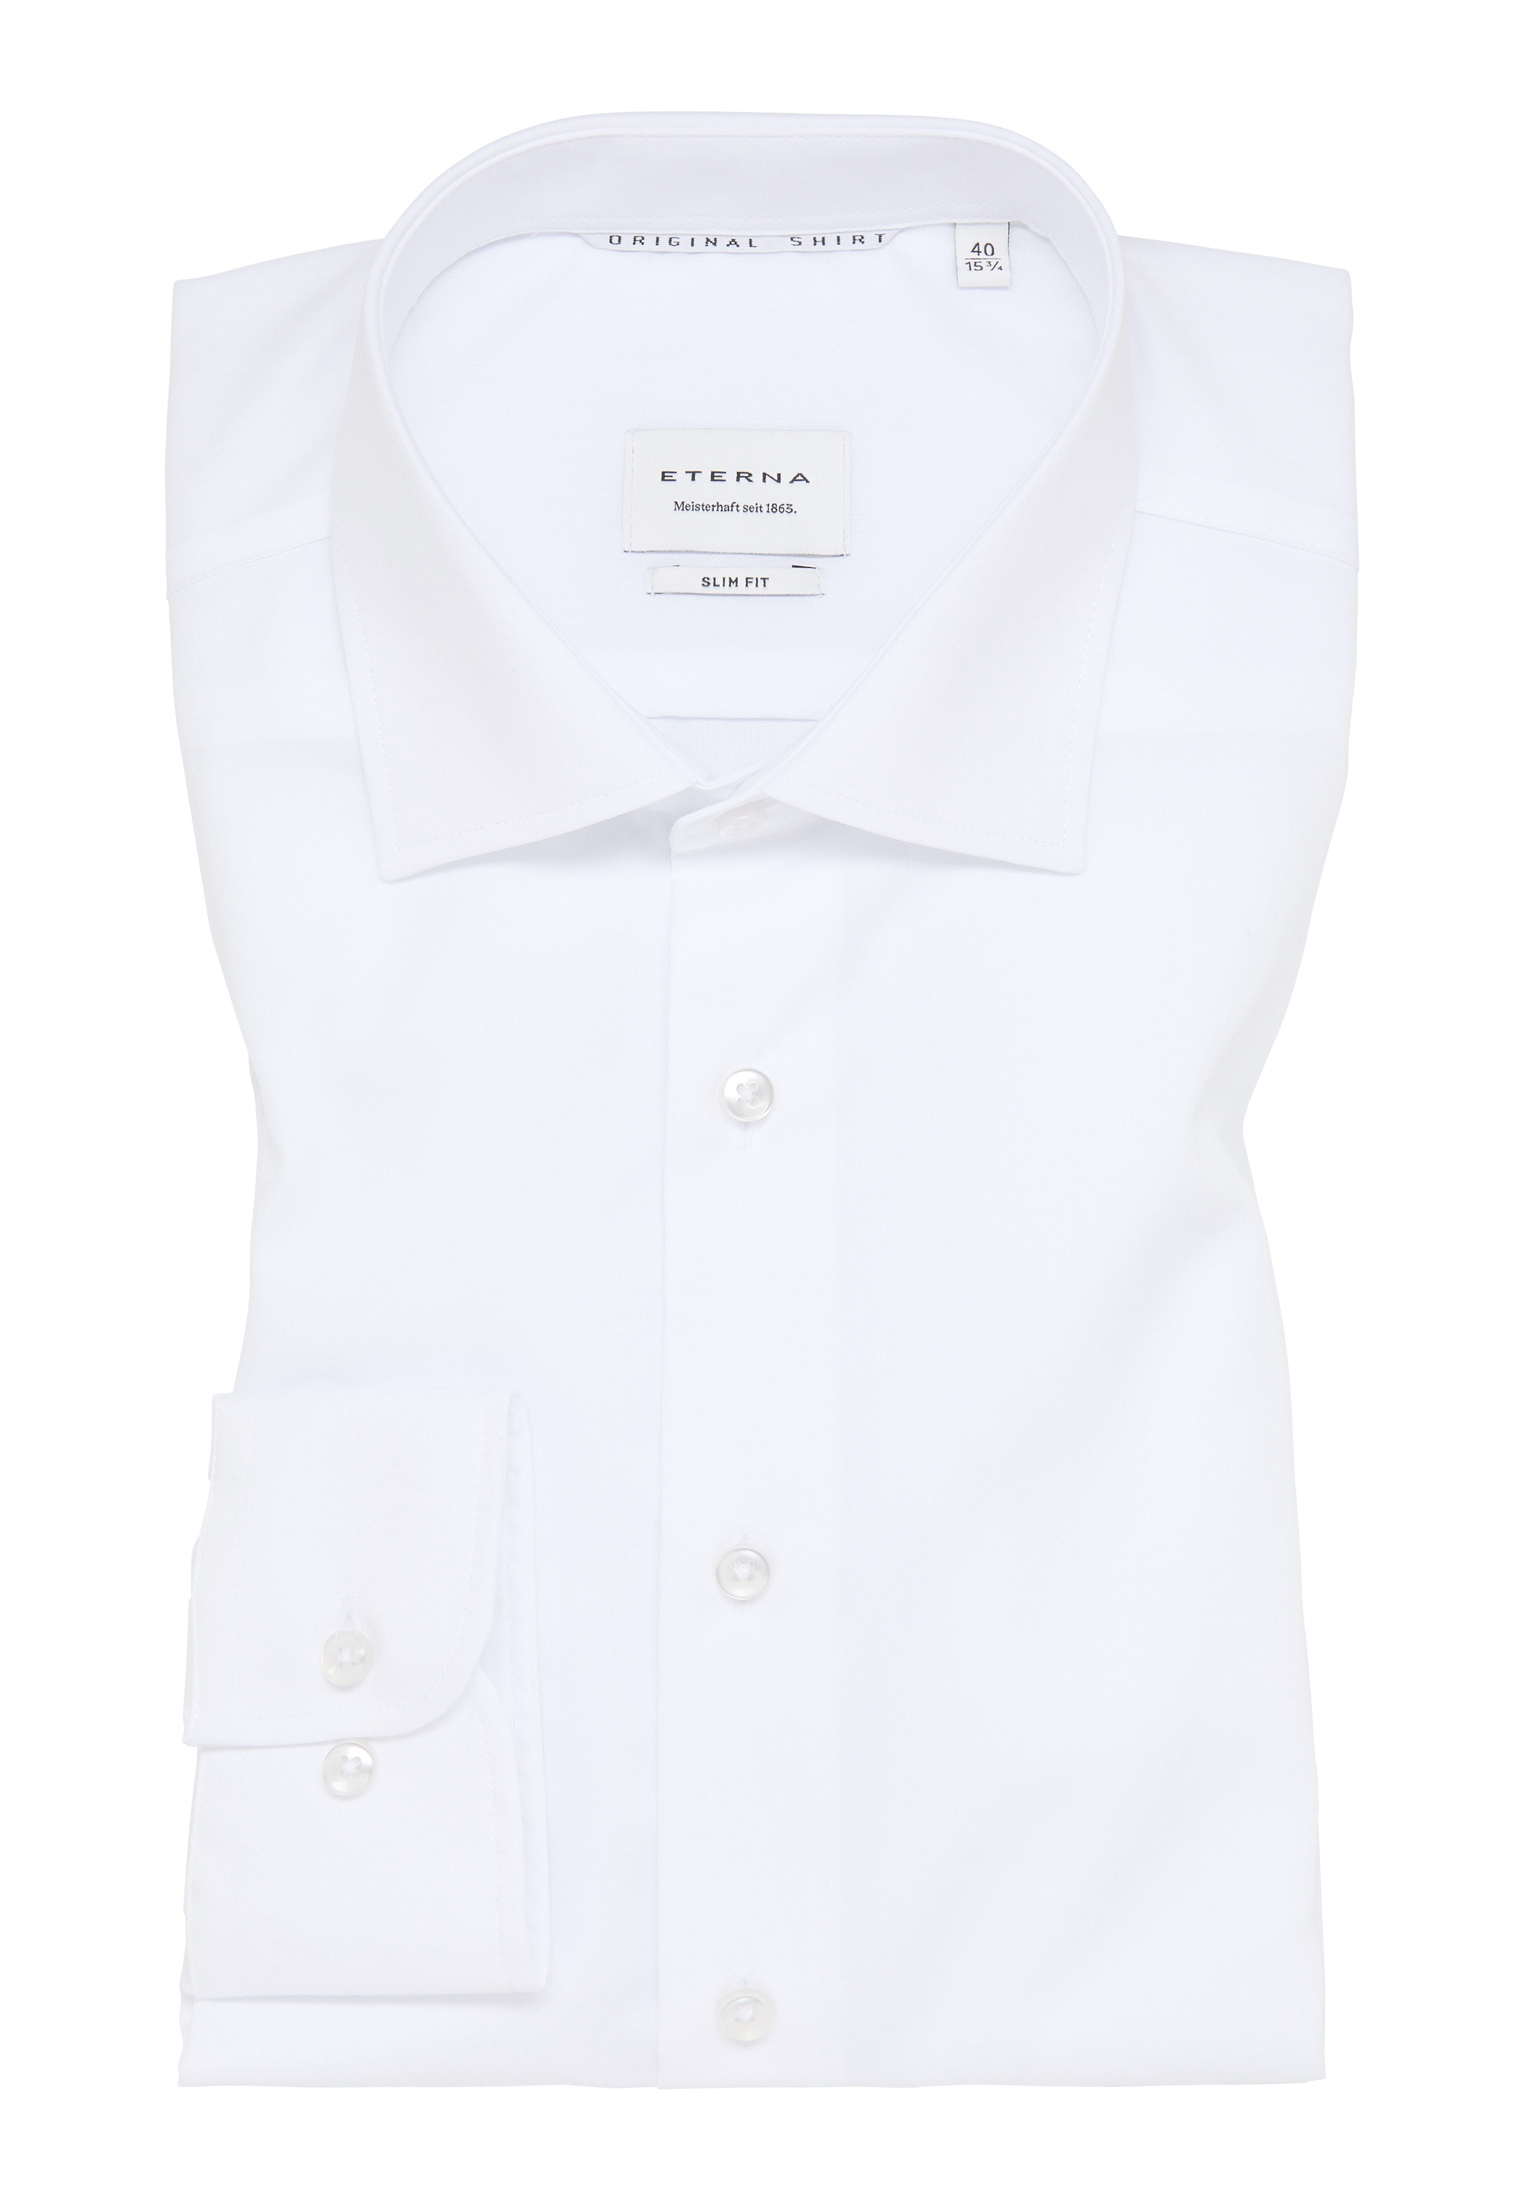 1SH12598-00-01-40-1/1 | weiß Shirt | | 40 unifarben | in Original FIT weiß Langarm SLIM